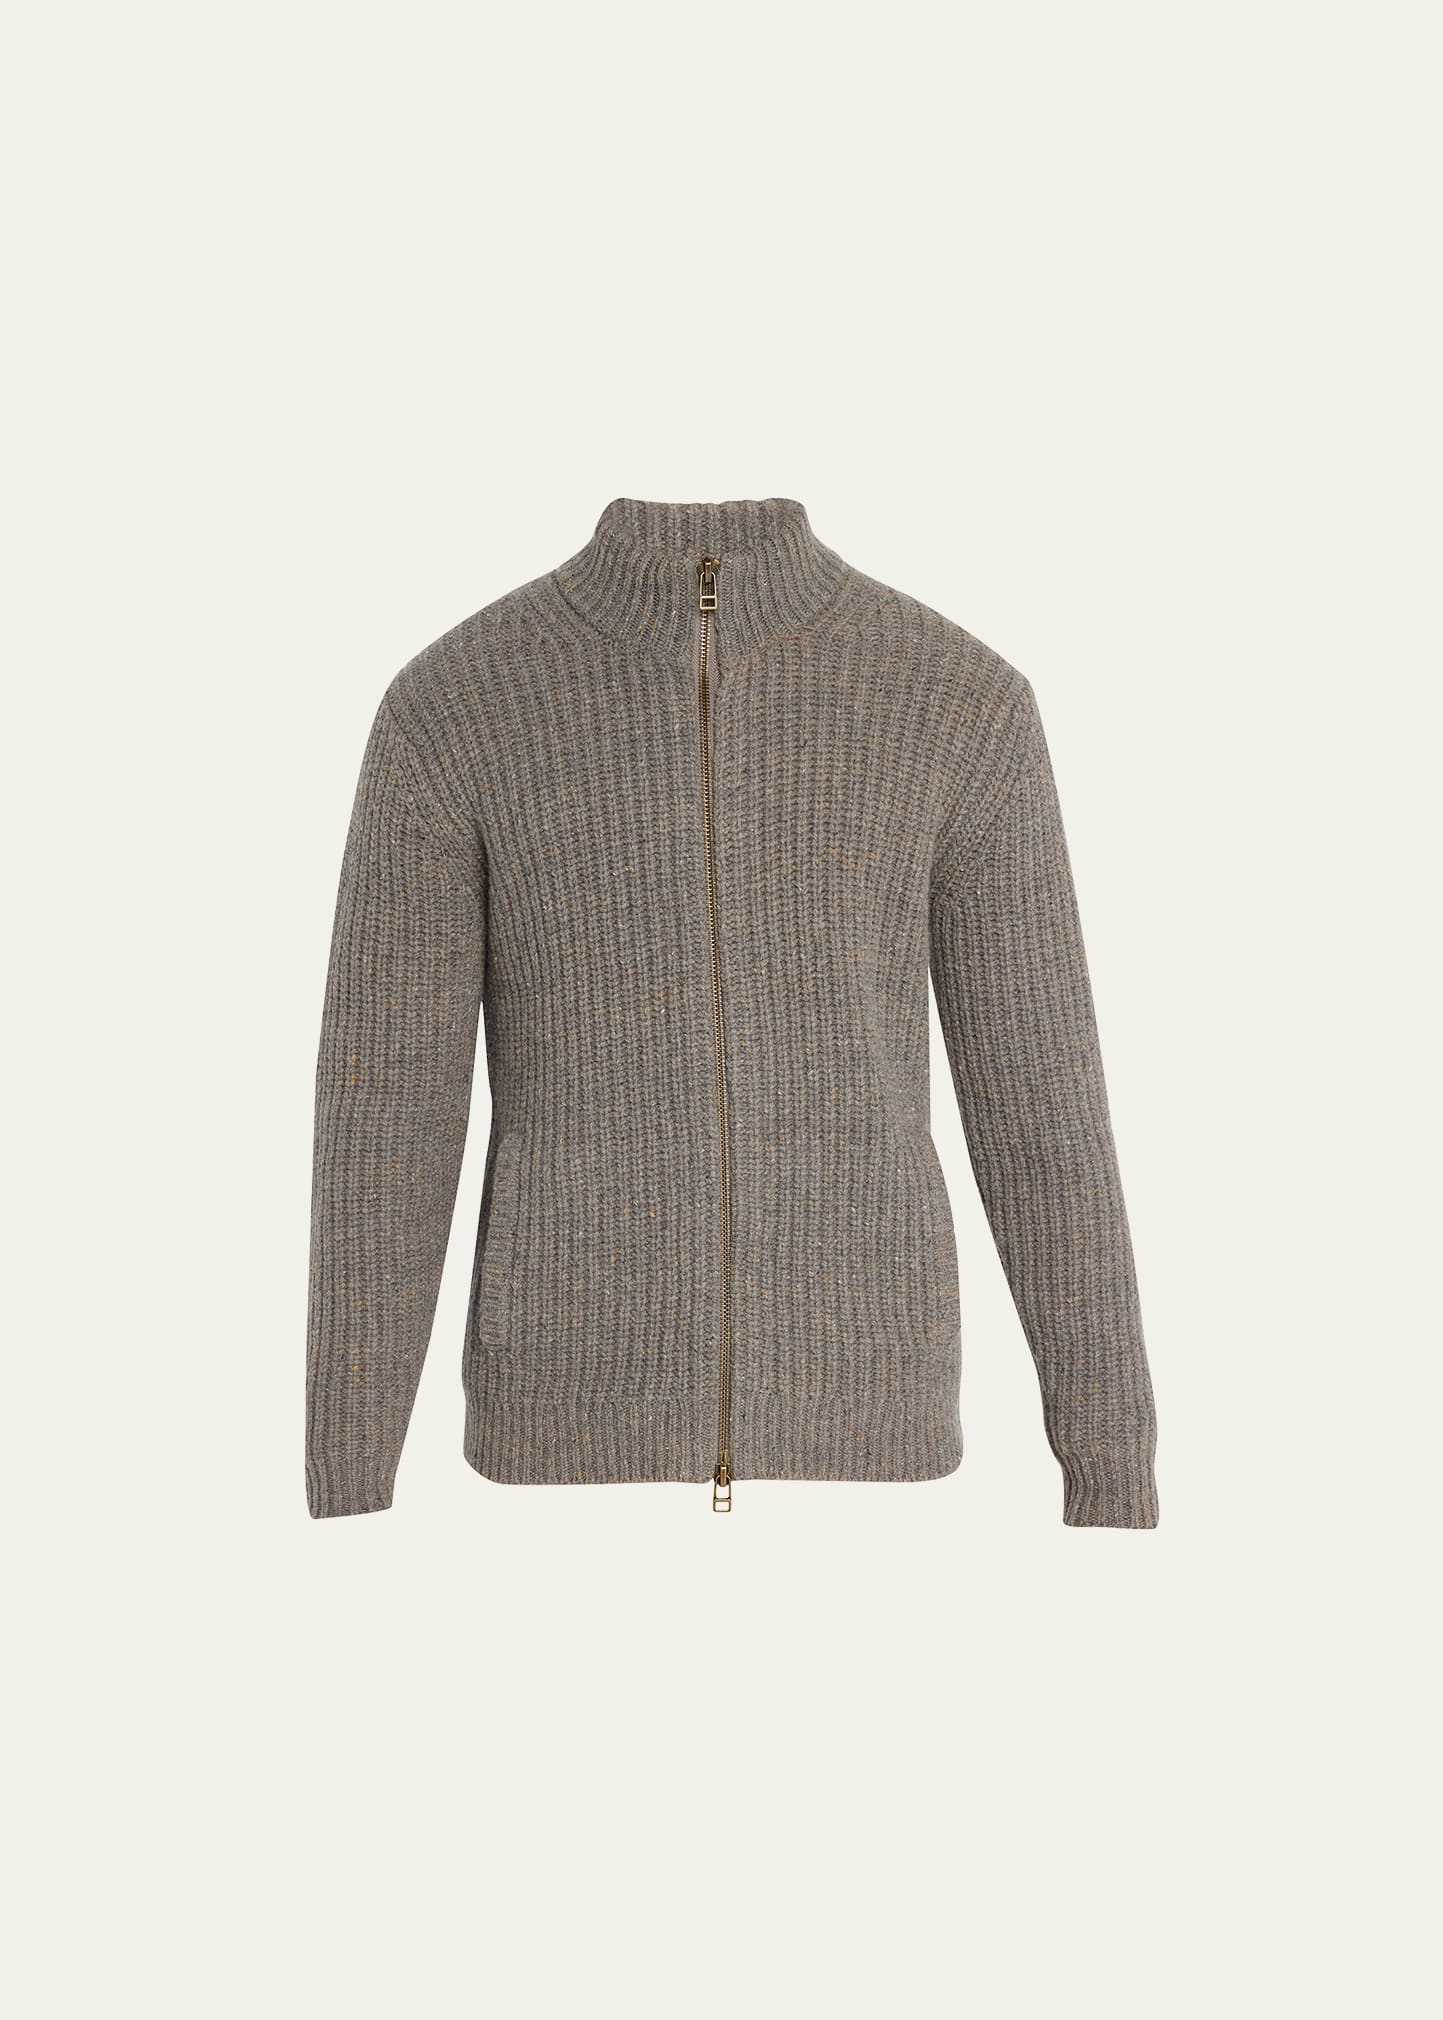 Men's Full-Zip Fisherman's Rib Sweater